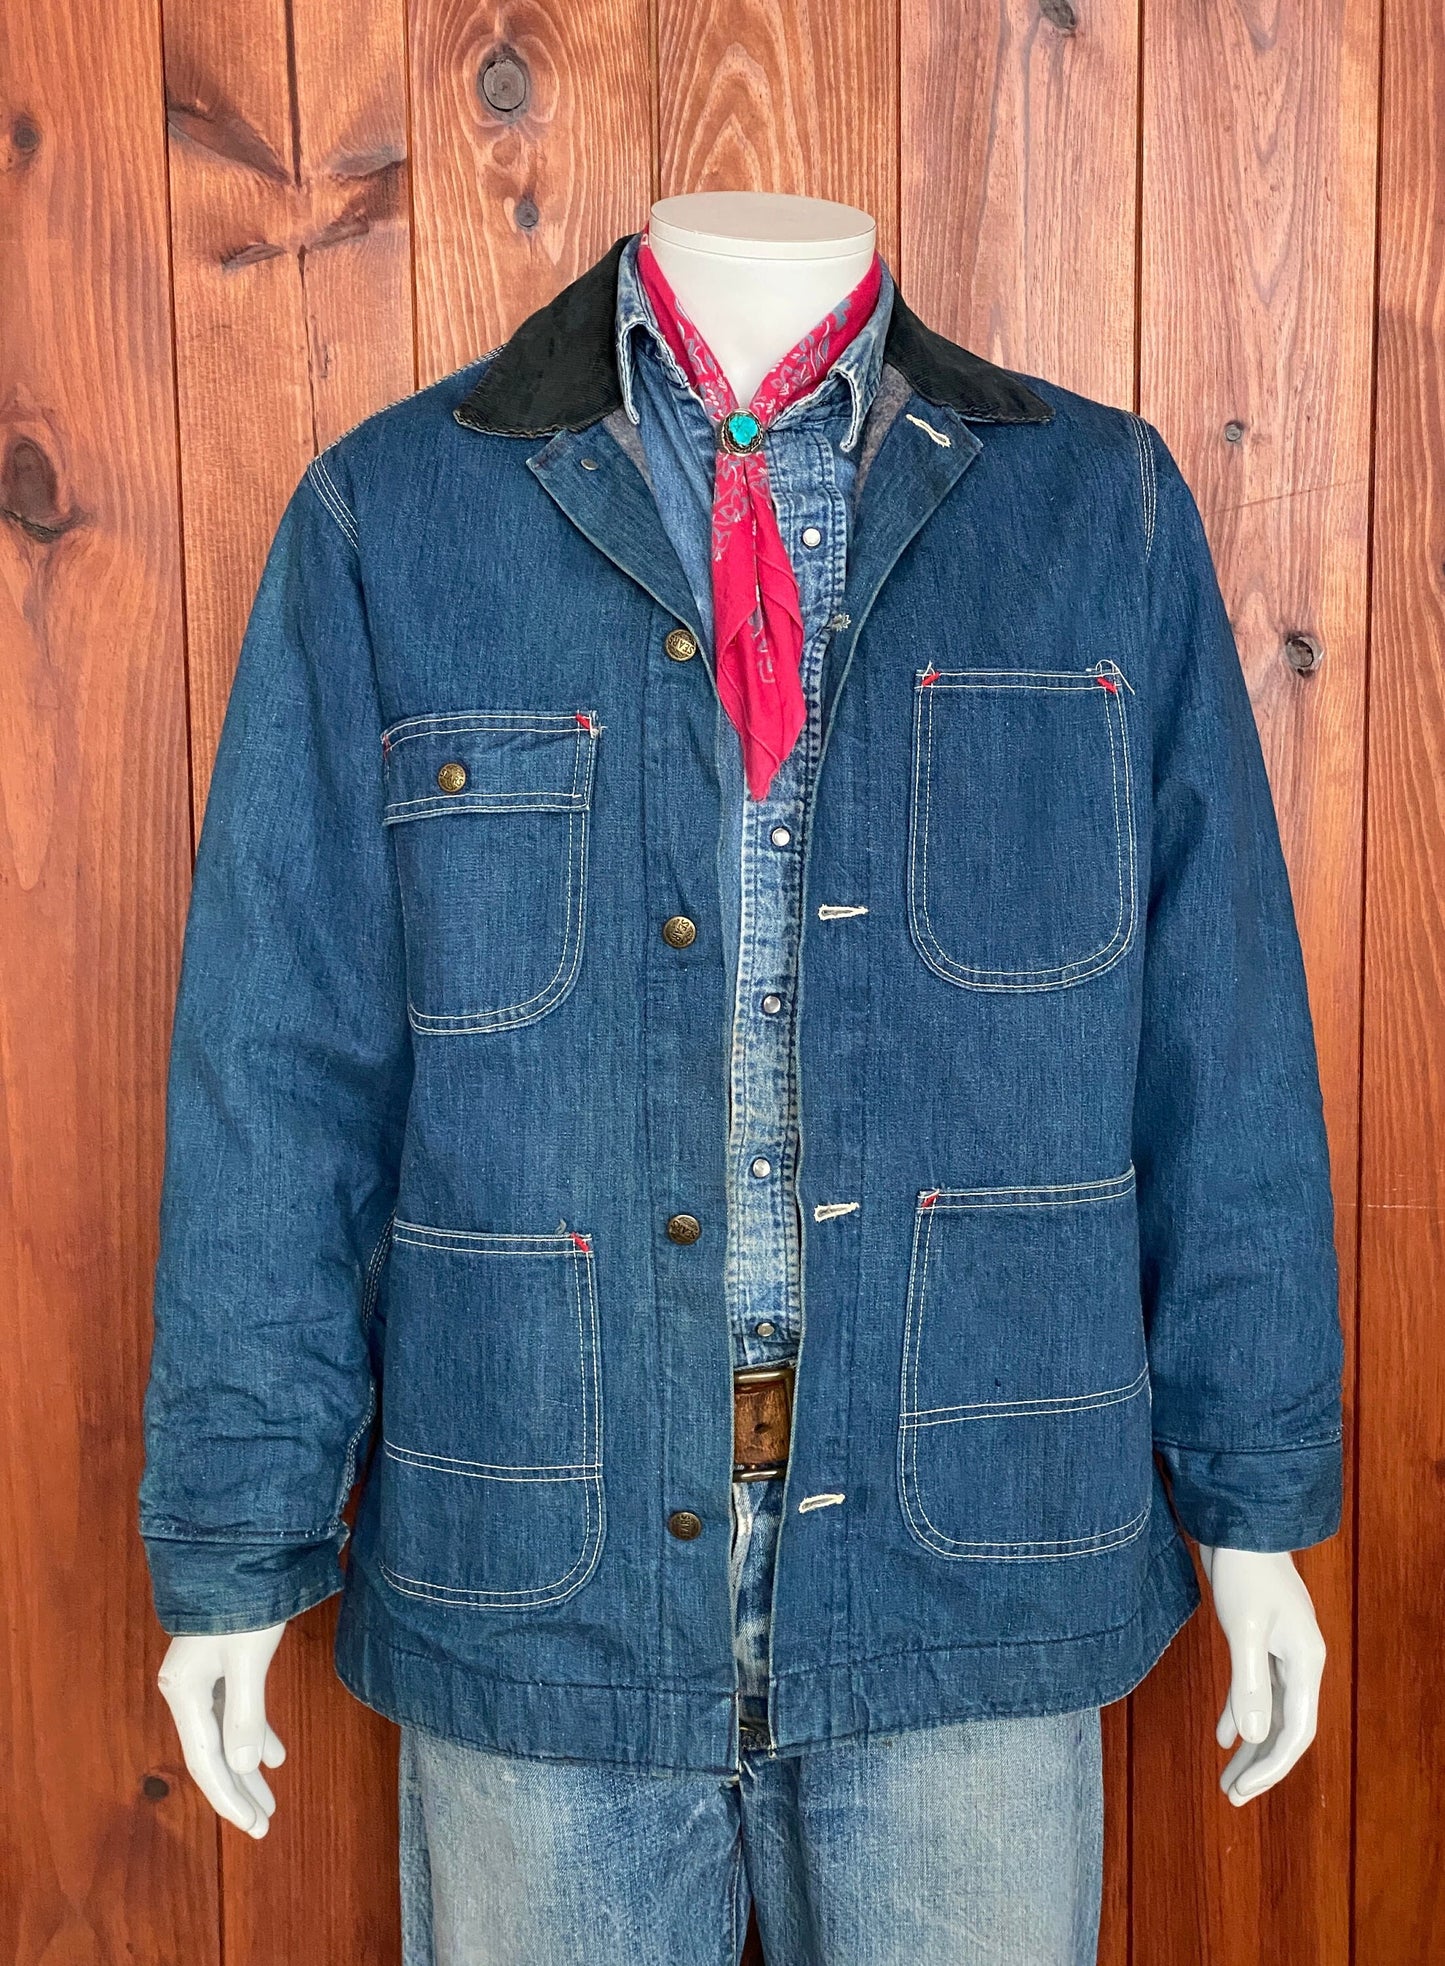 Size Med Tall. Vintage Sears denim Chore Lined coat Jacket